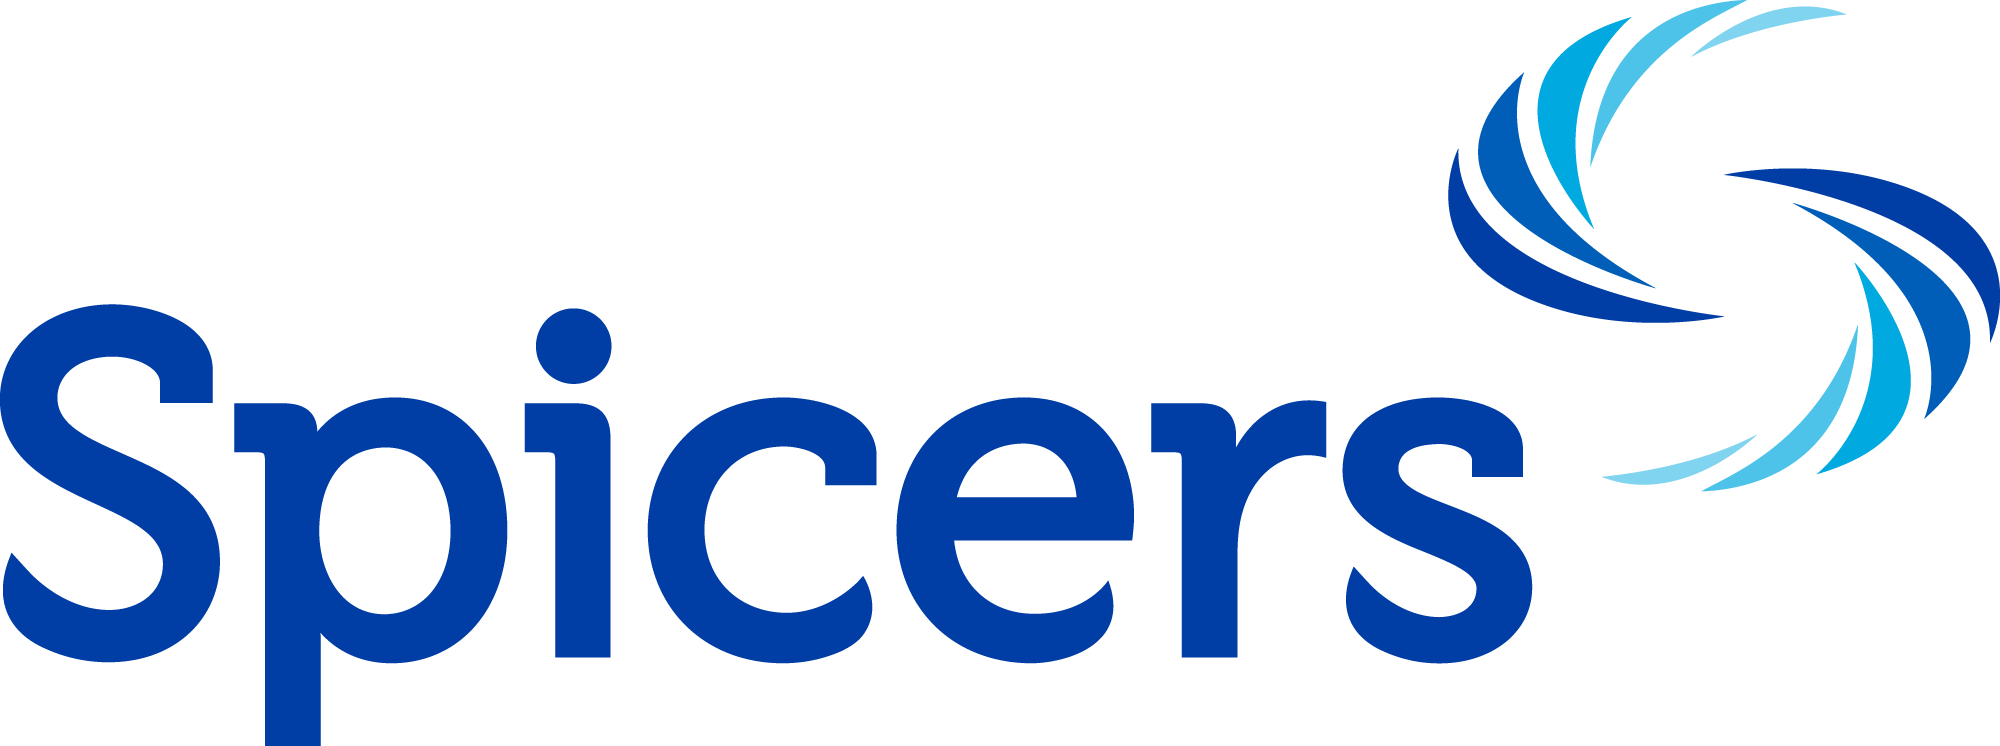 Spicers logo RGB